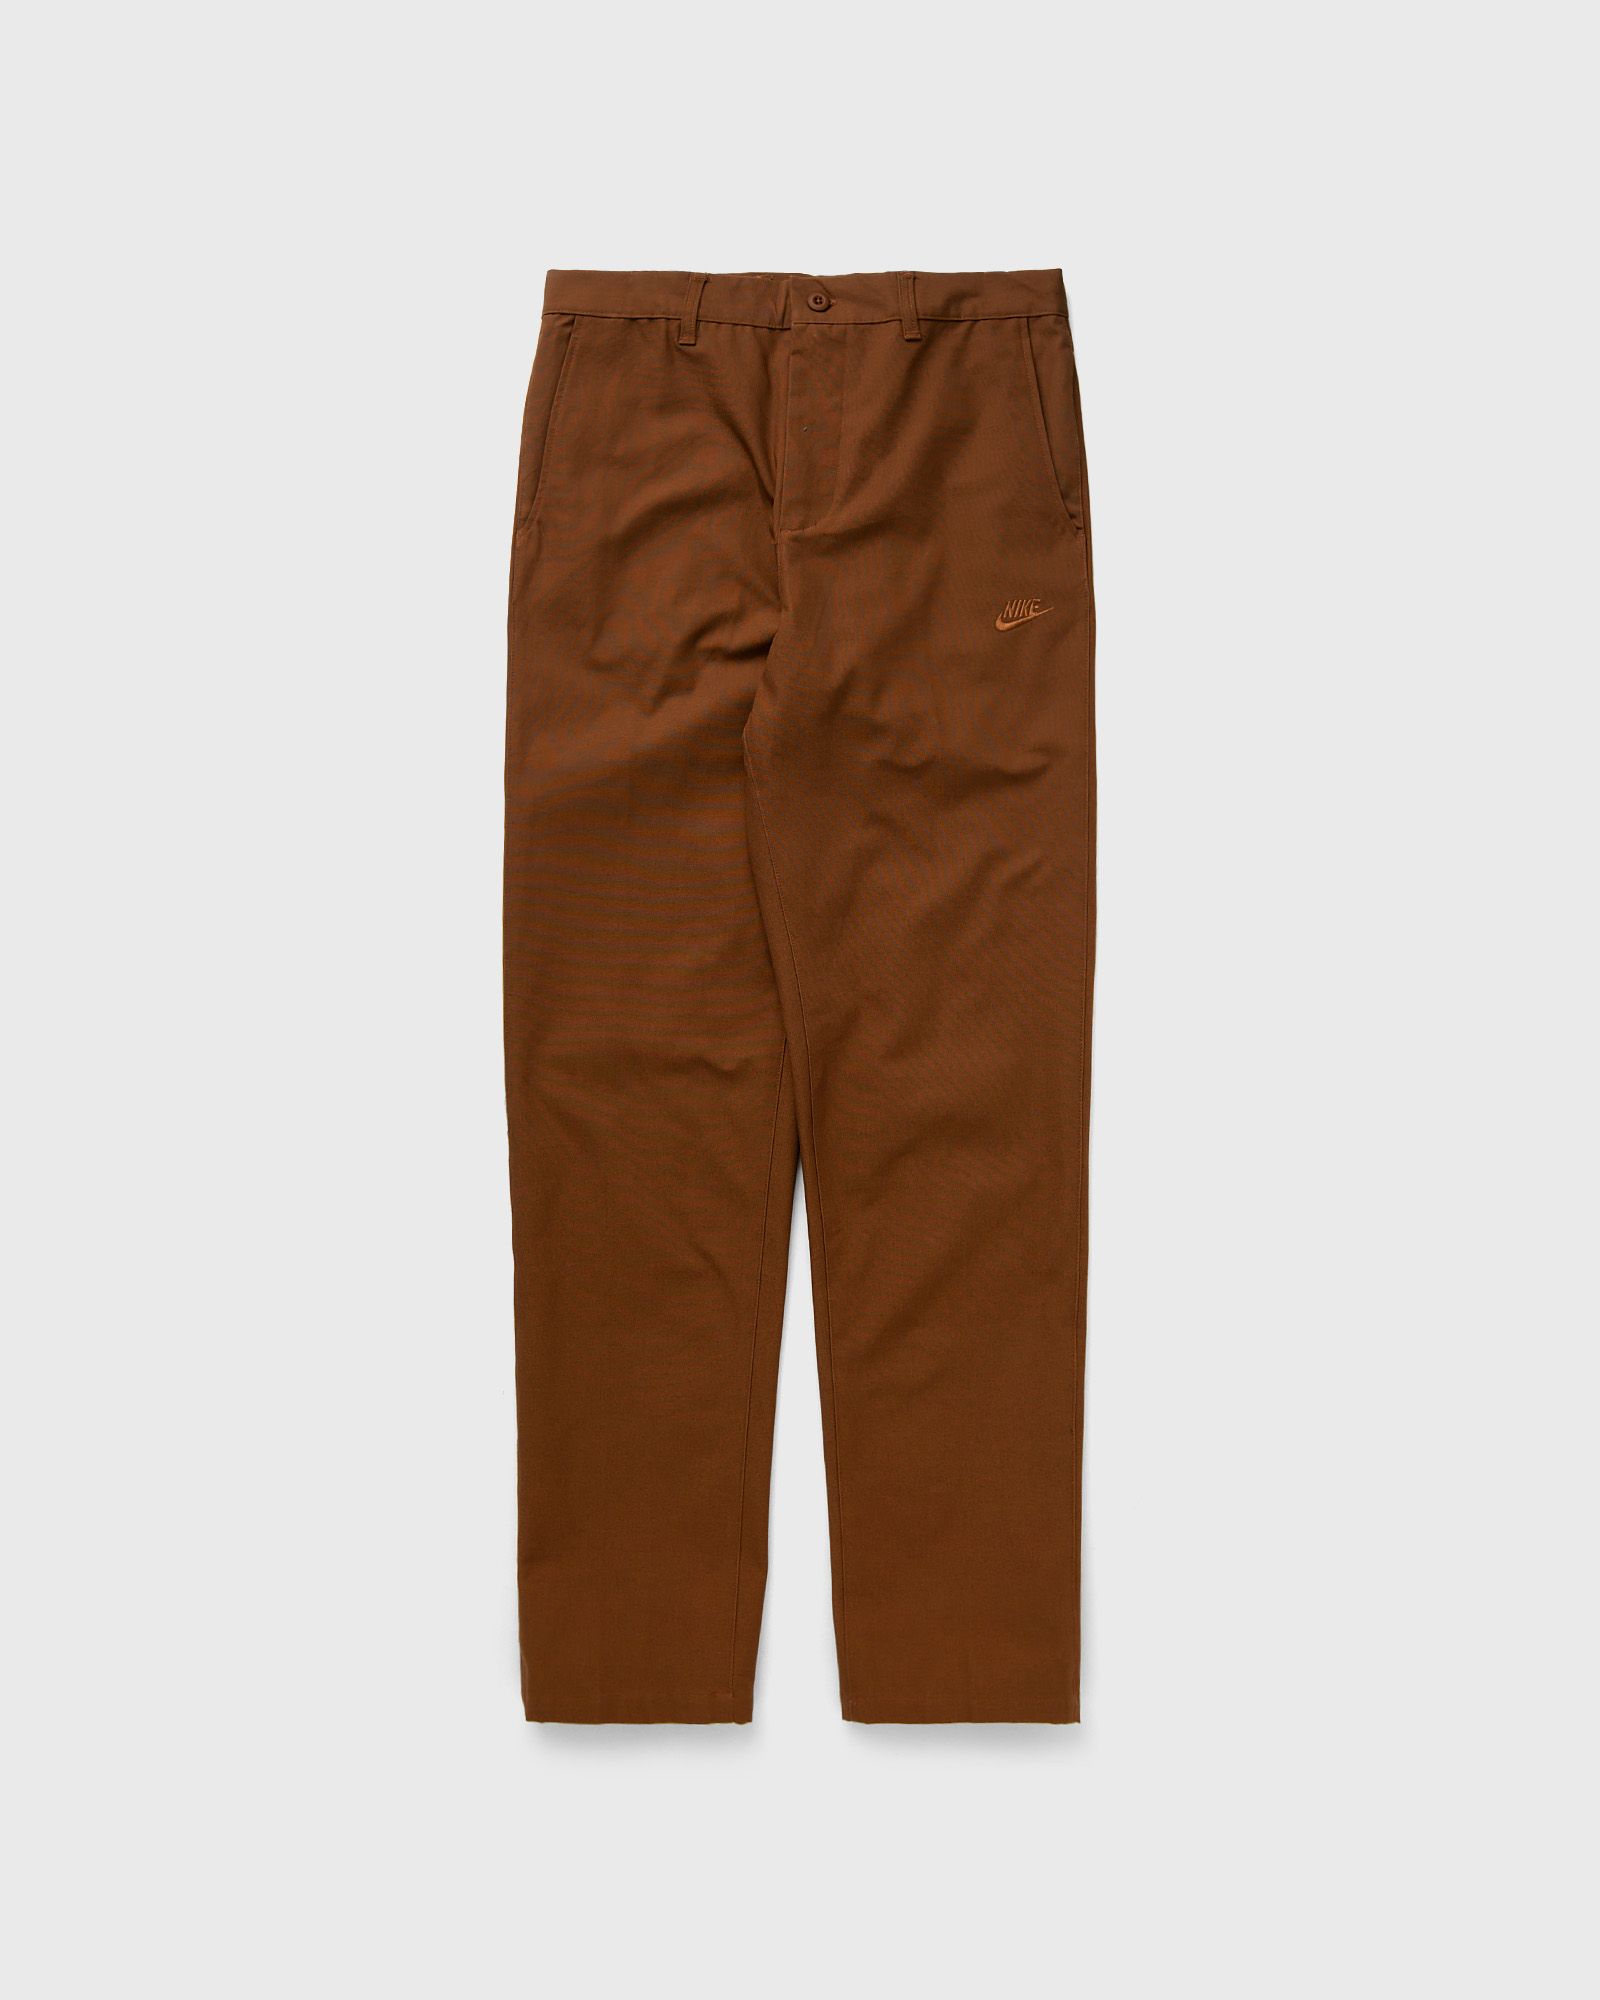 Nike - club chino pants men casual pants brown in größe:xxl